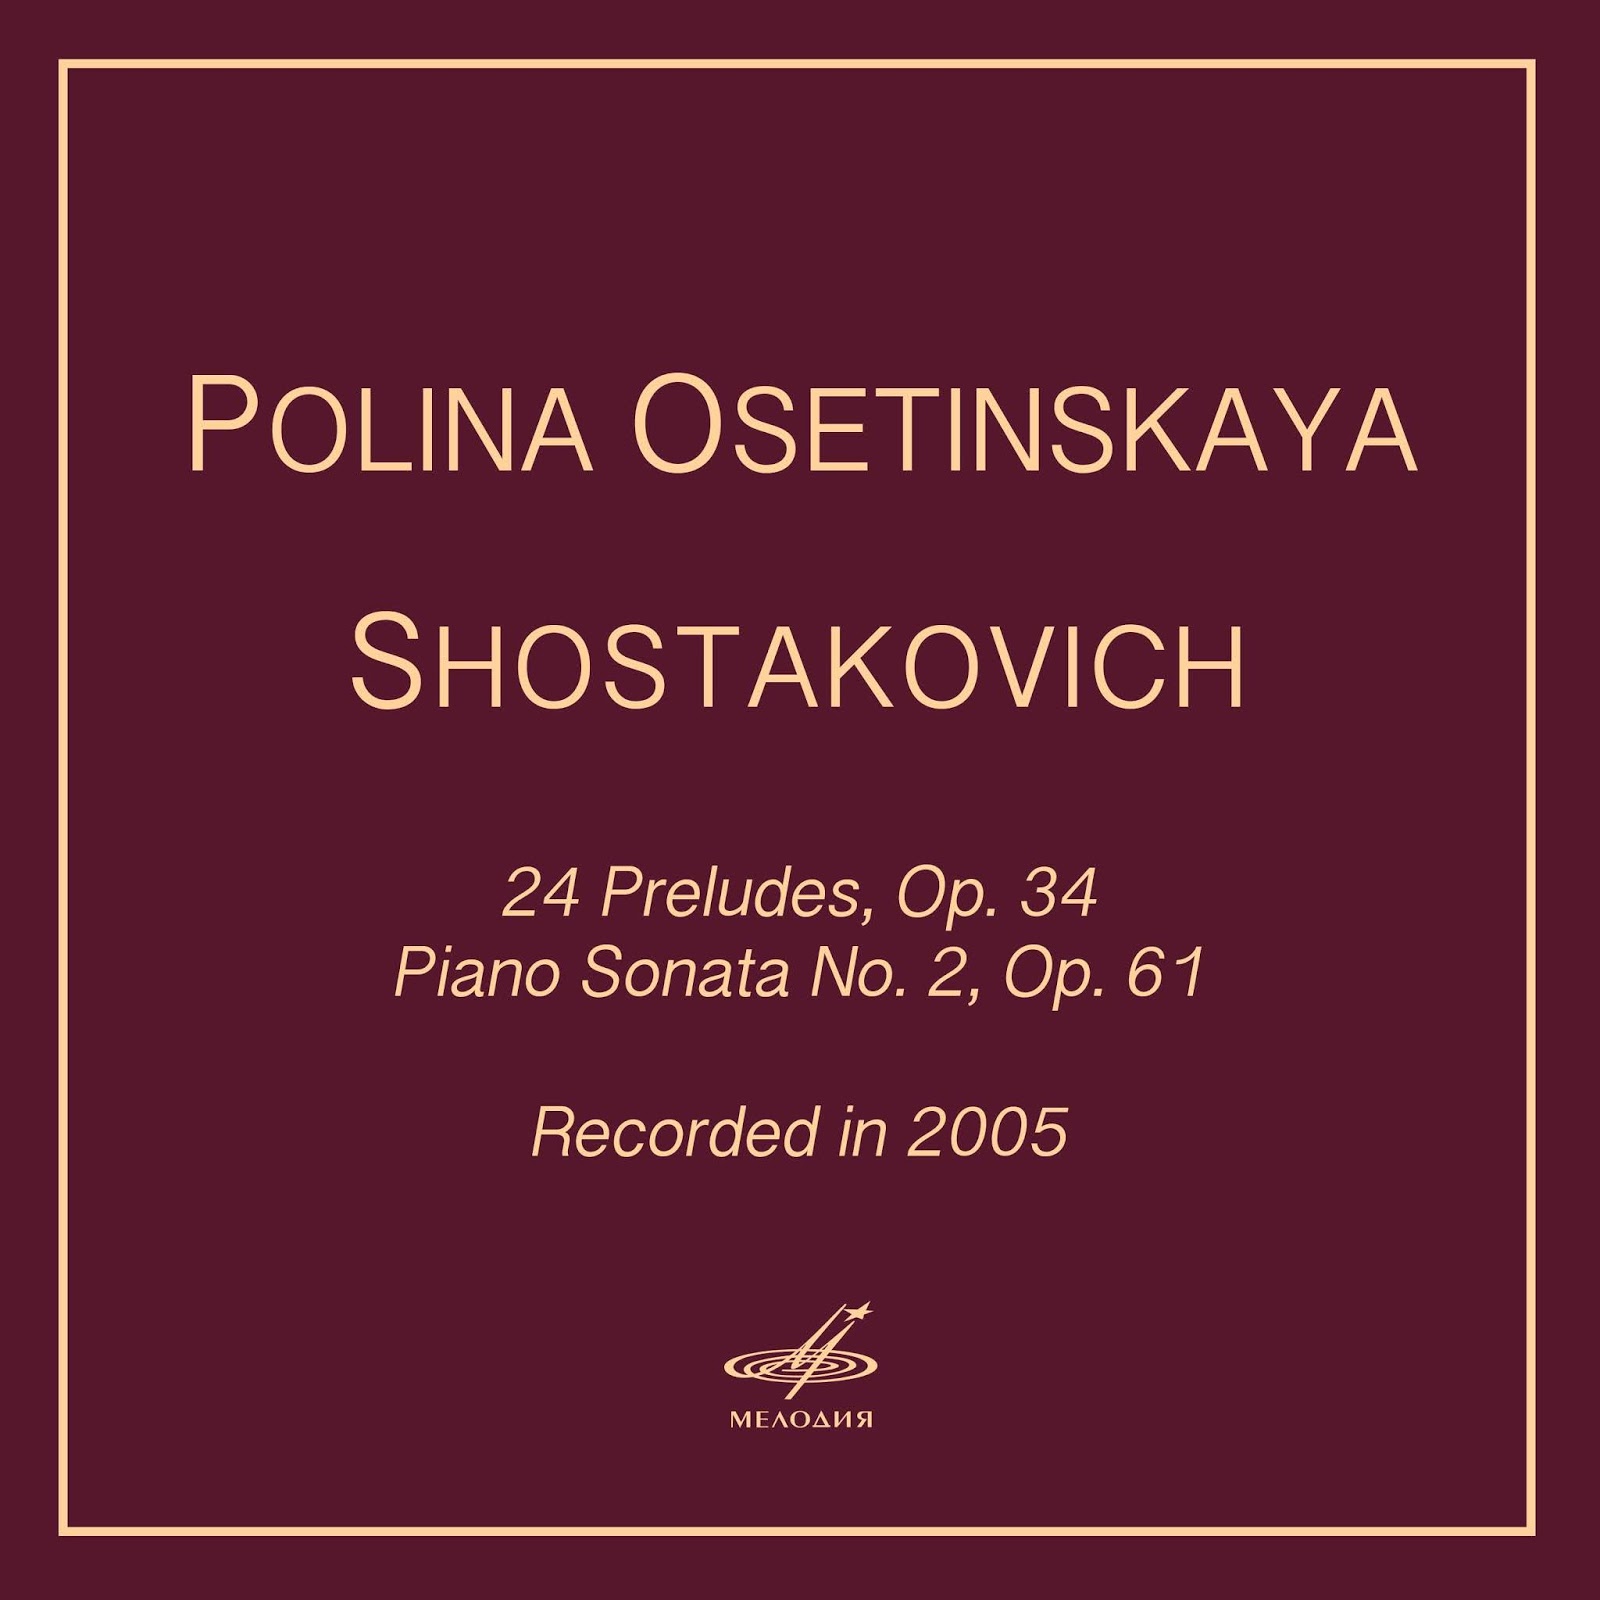 Music Is The Key Polina Osetinskaya Shostakovich 24 Preludes Op